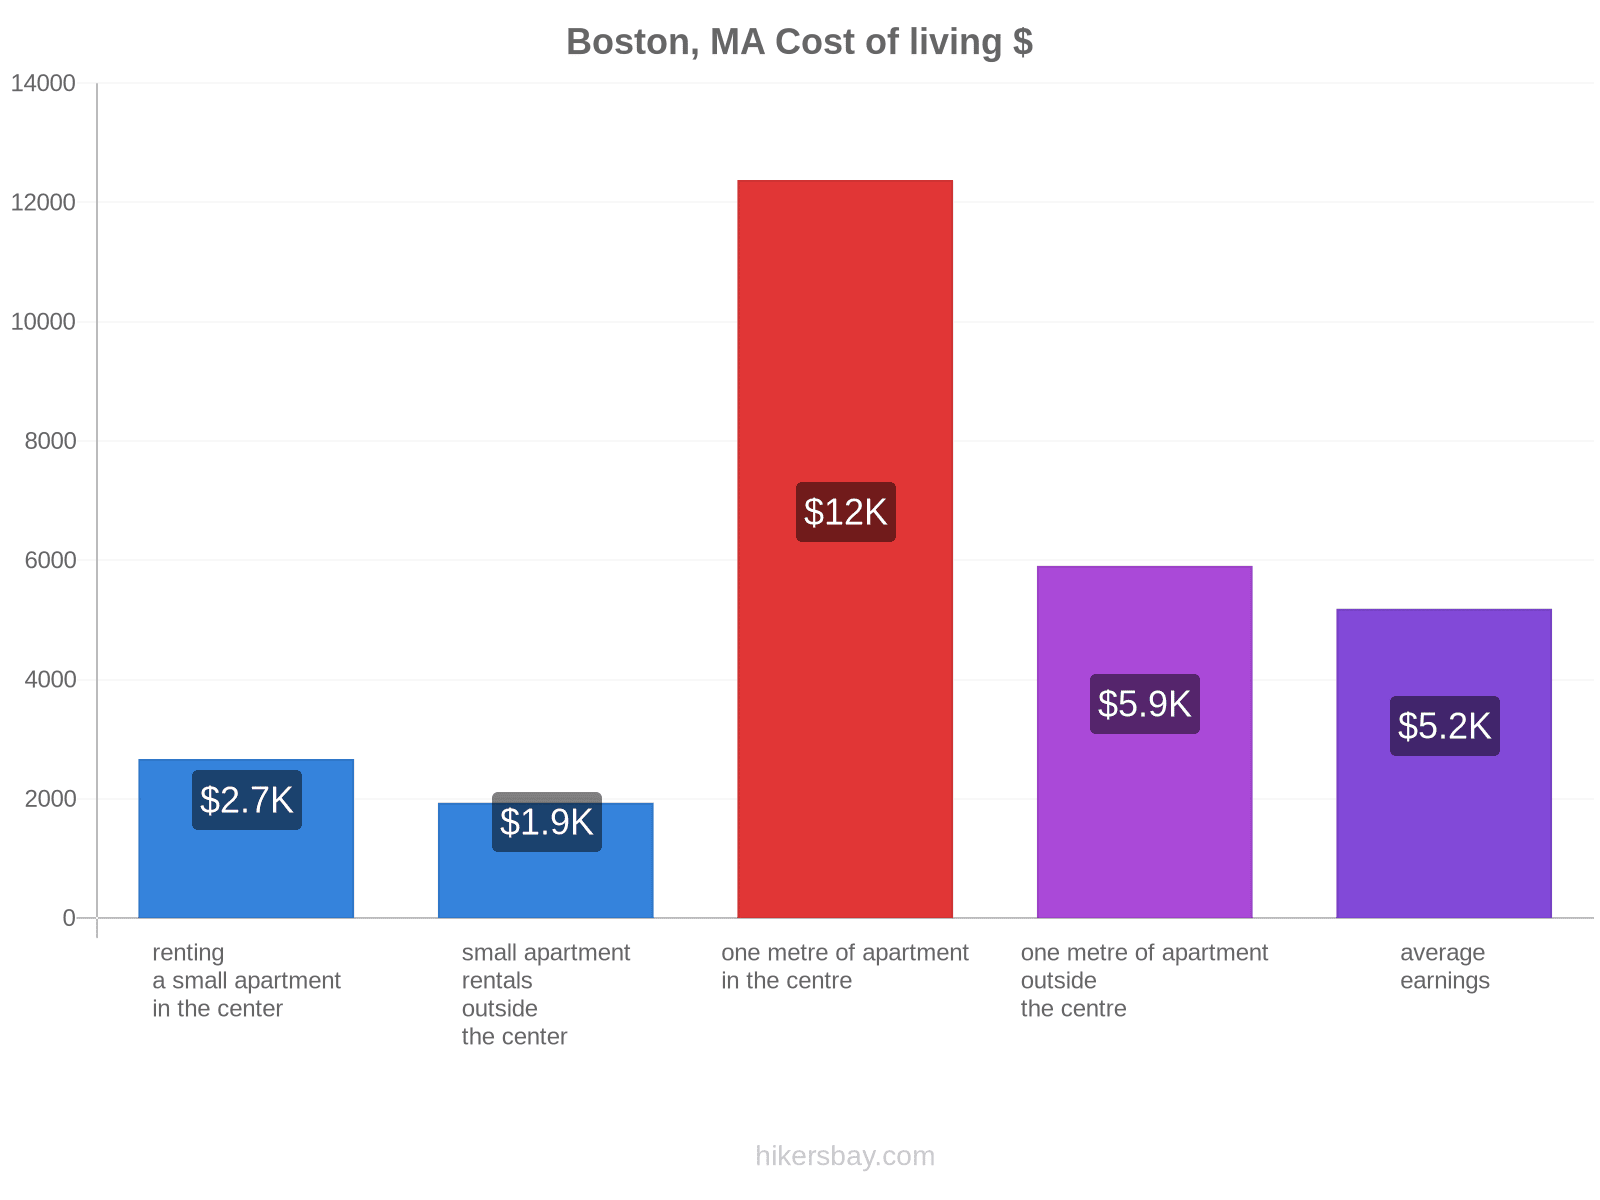 Boston, MA cost of living hikersbay.com